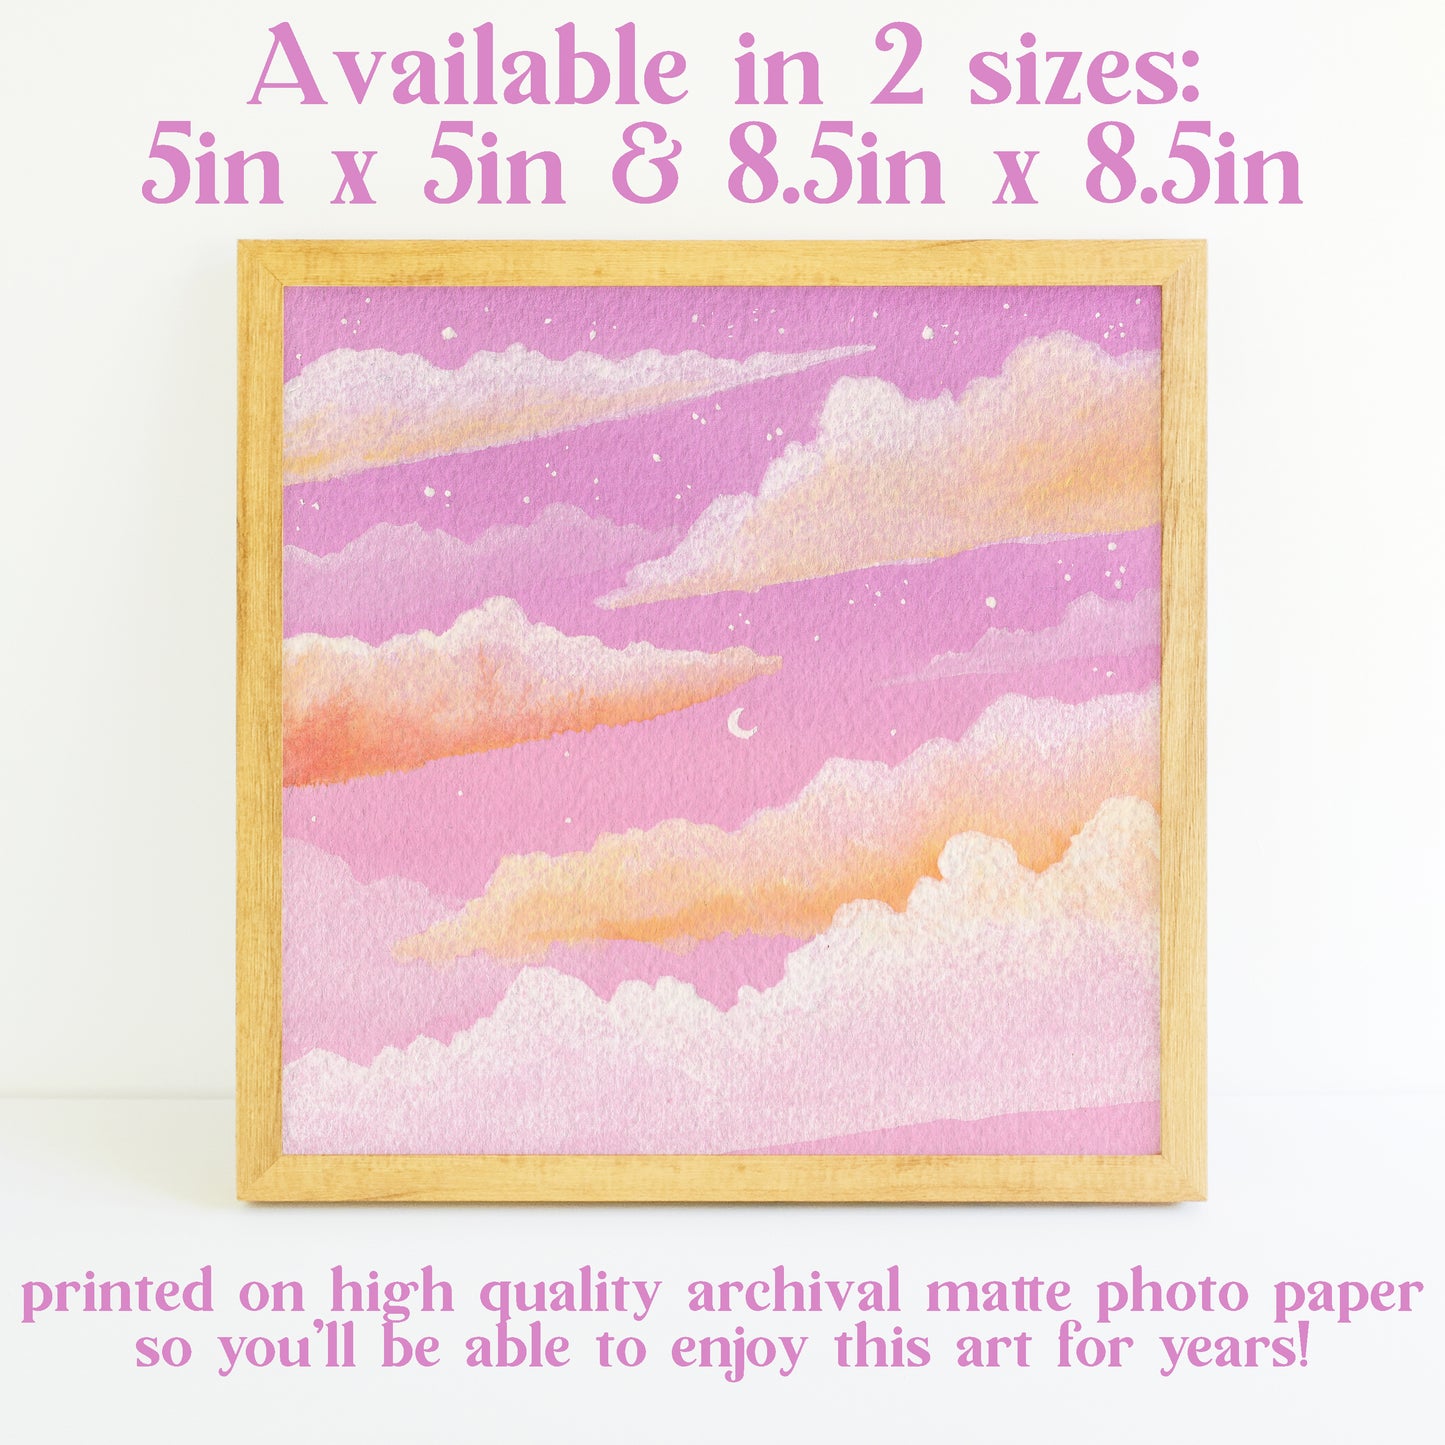 Dreamy Pink Moon Sunset - Watercolor Sky Art Print